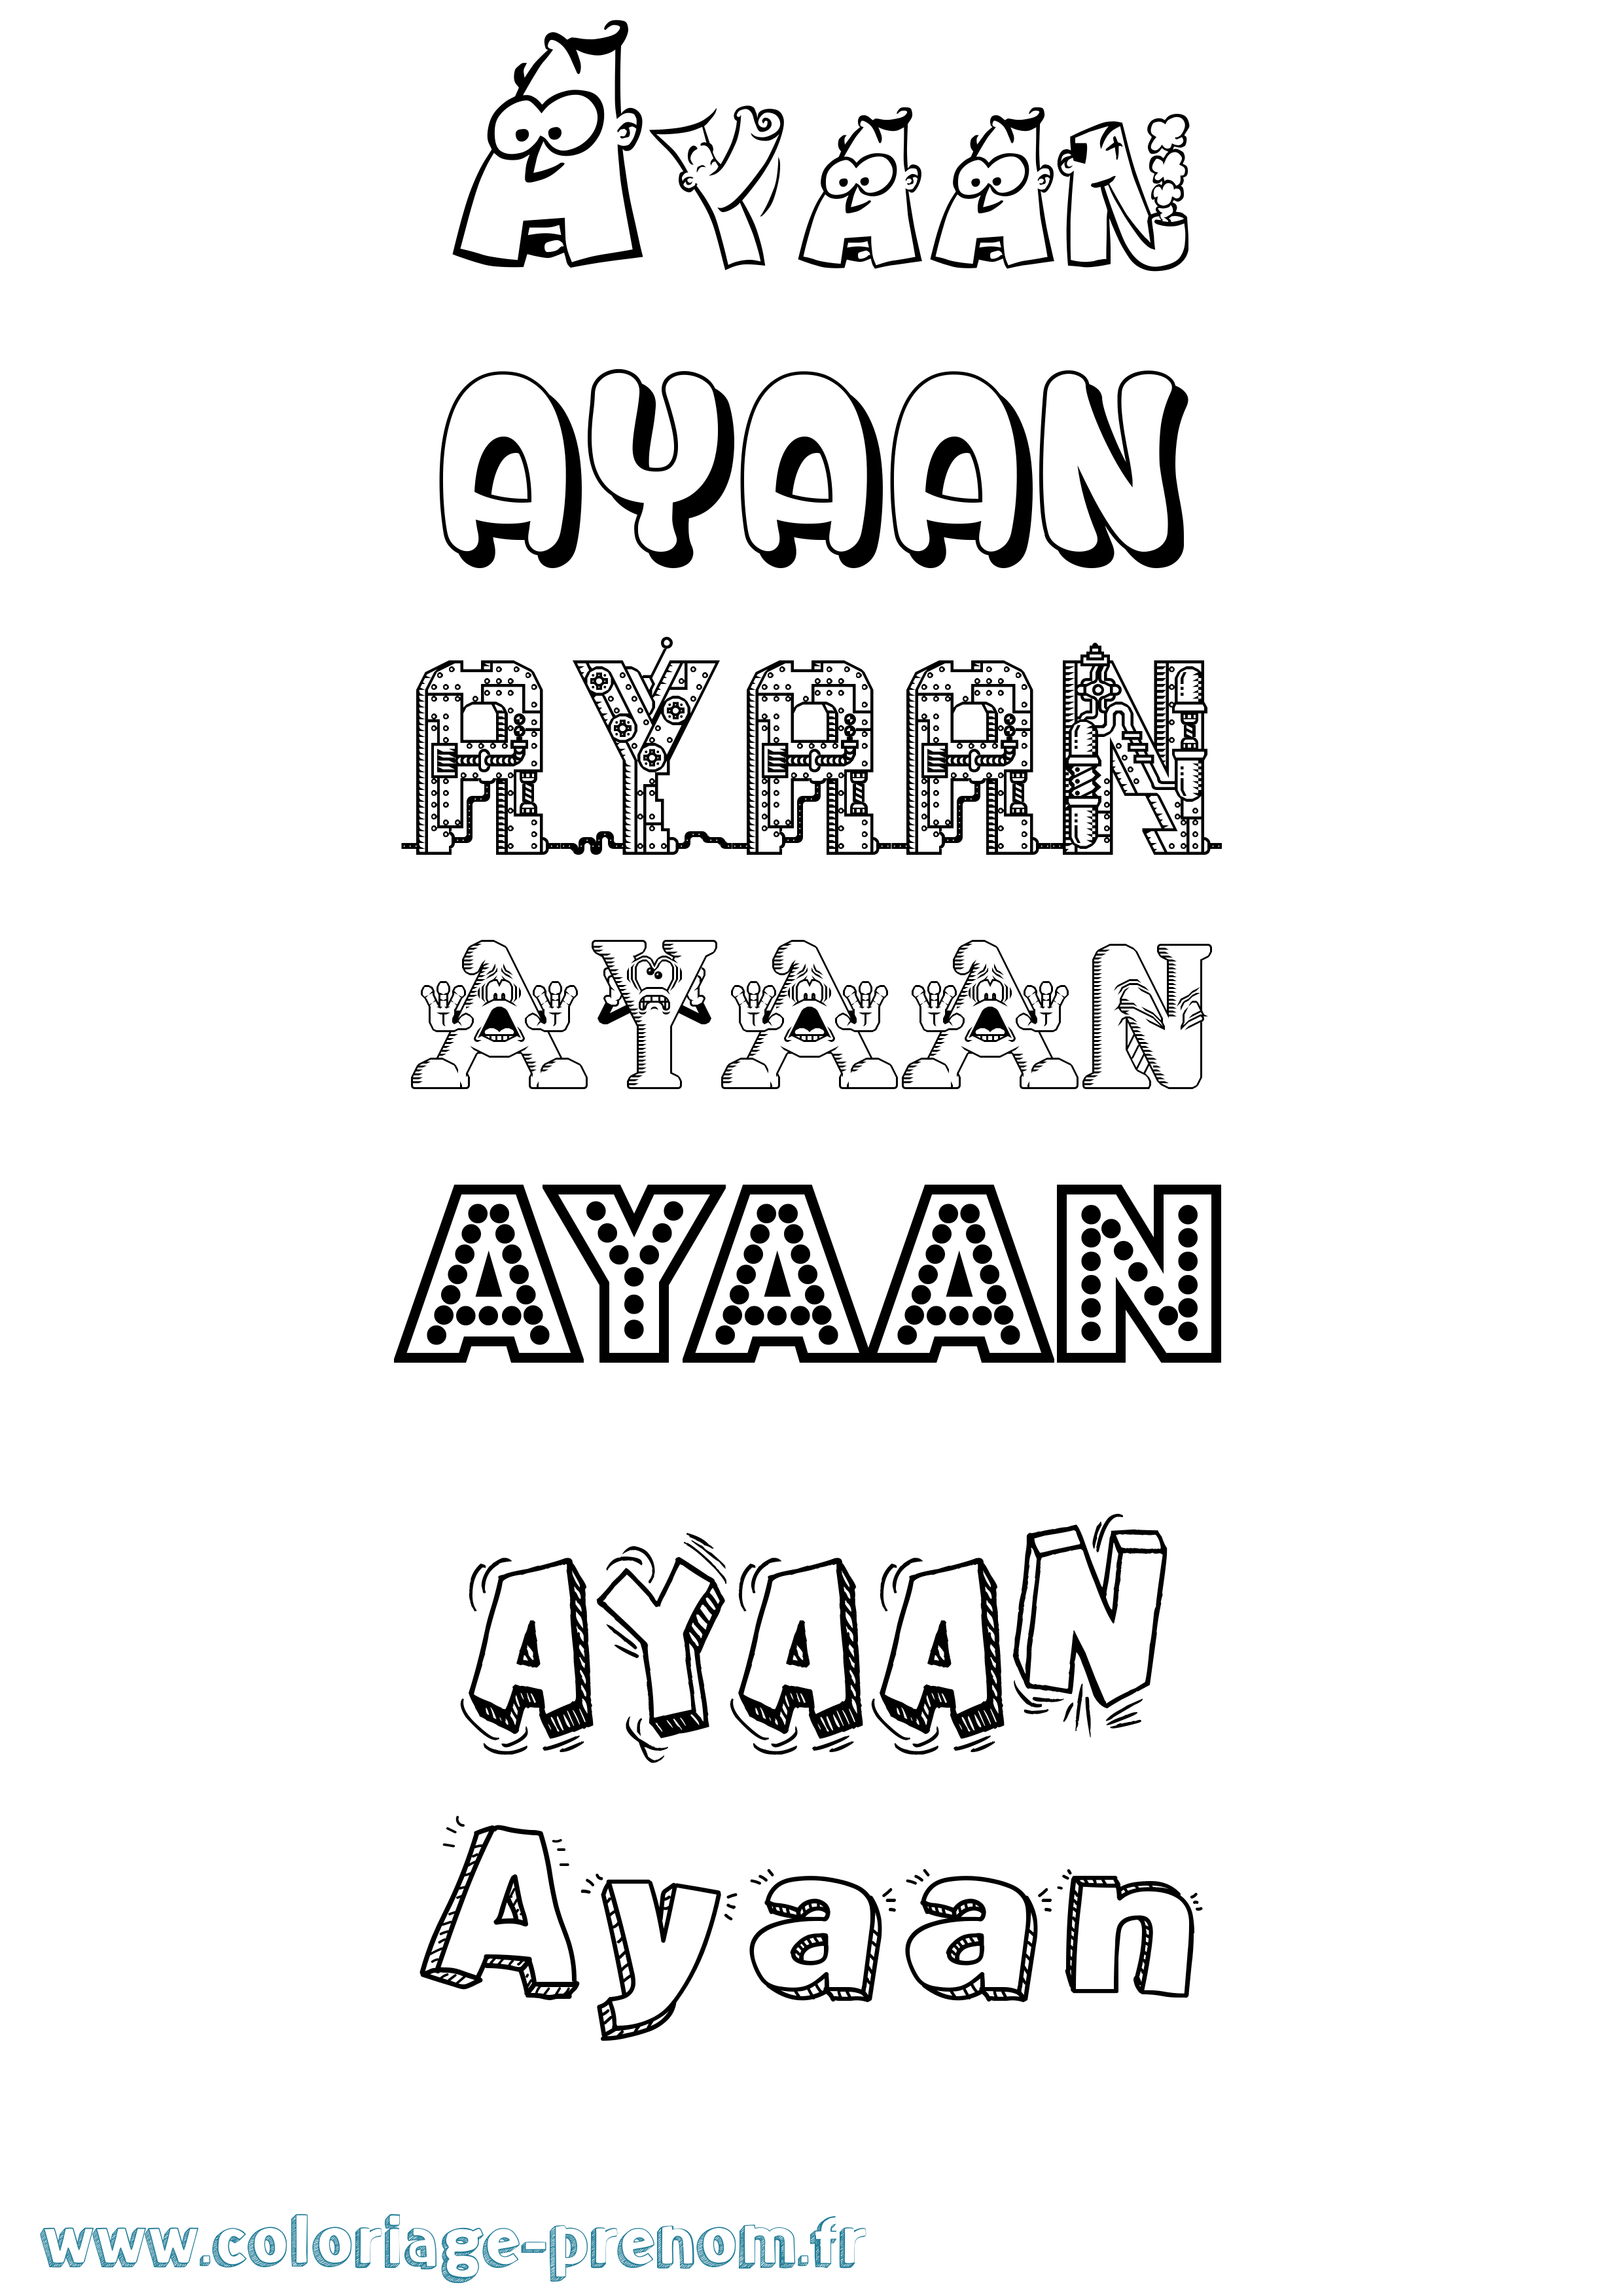 Coloriage prénom Ayaan